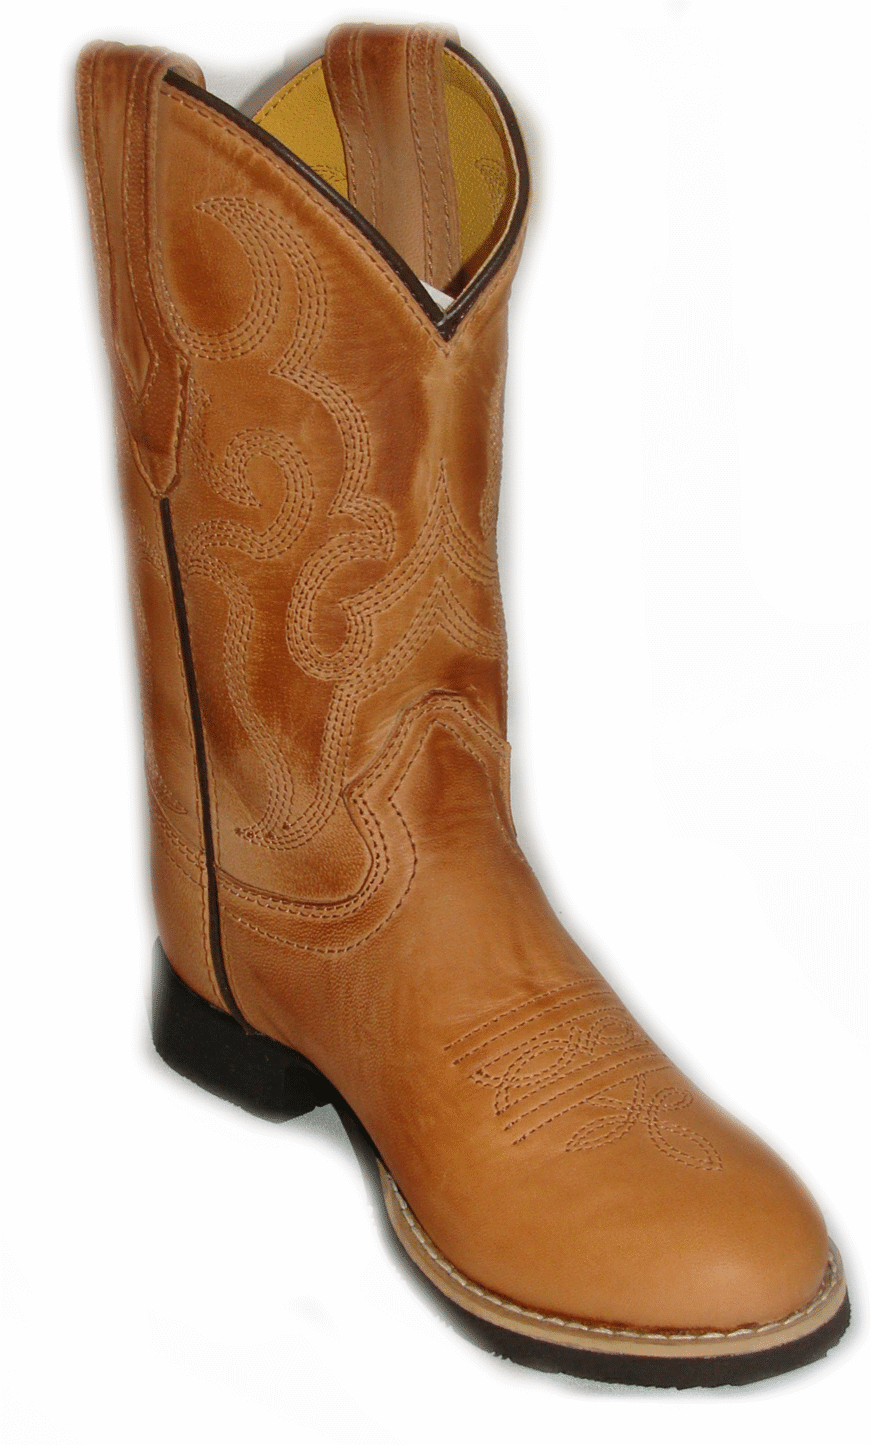 cowboy boot - Clip Art Library